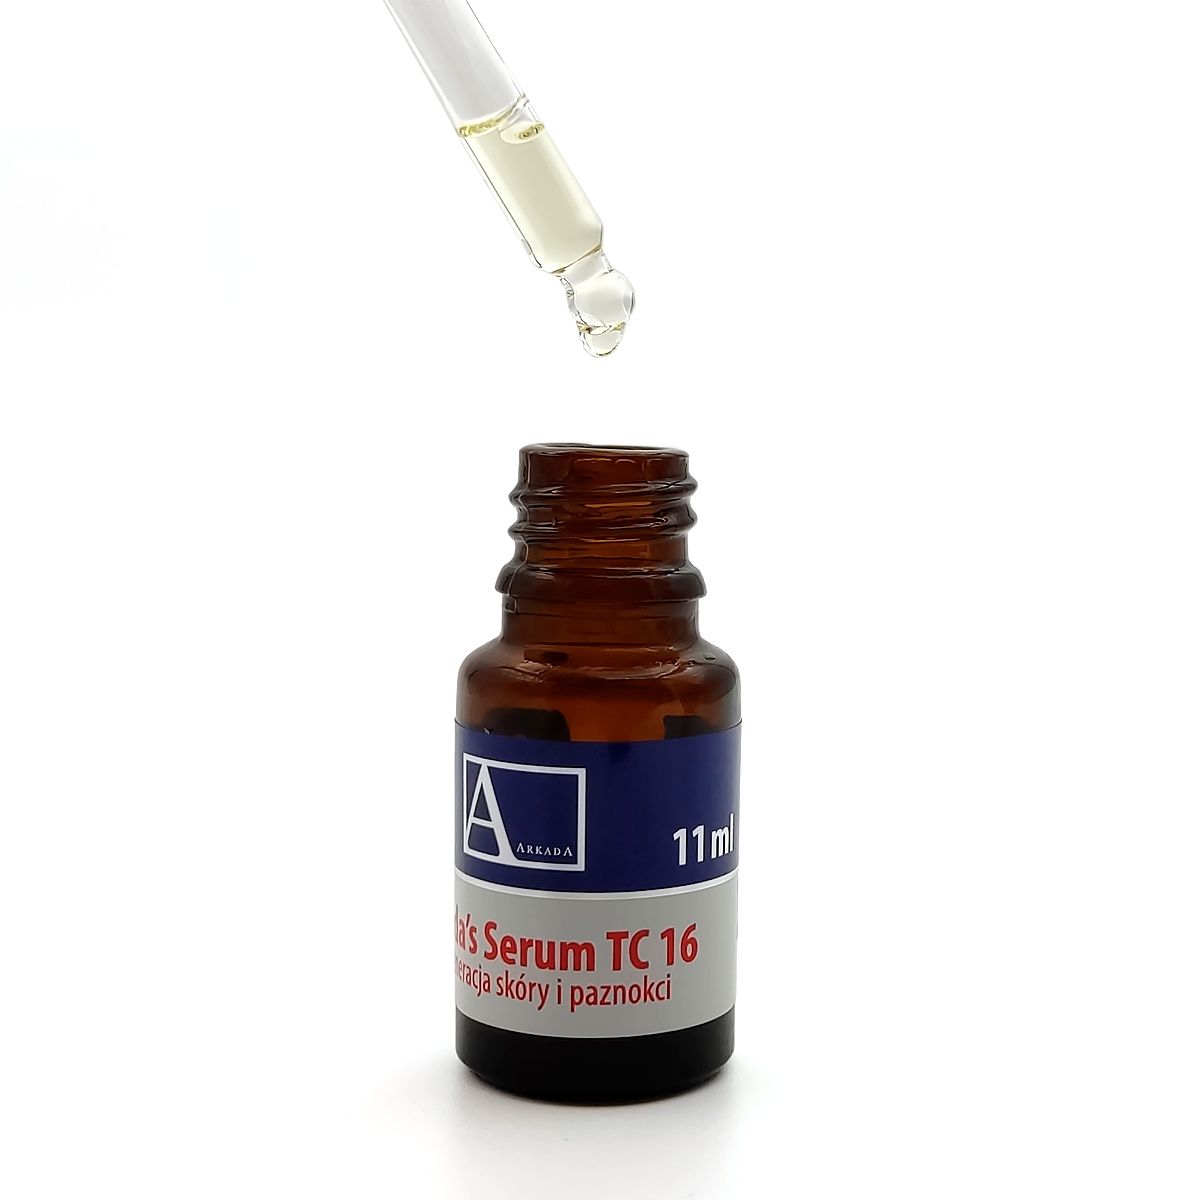 Arkada serum tc16. Arcada Serum tc16. Для ногтей arkada Serum tc16 коллагеновая. Arkadas Serum tc16 упаковка. Аркада Serum tc16 упаковка.